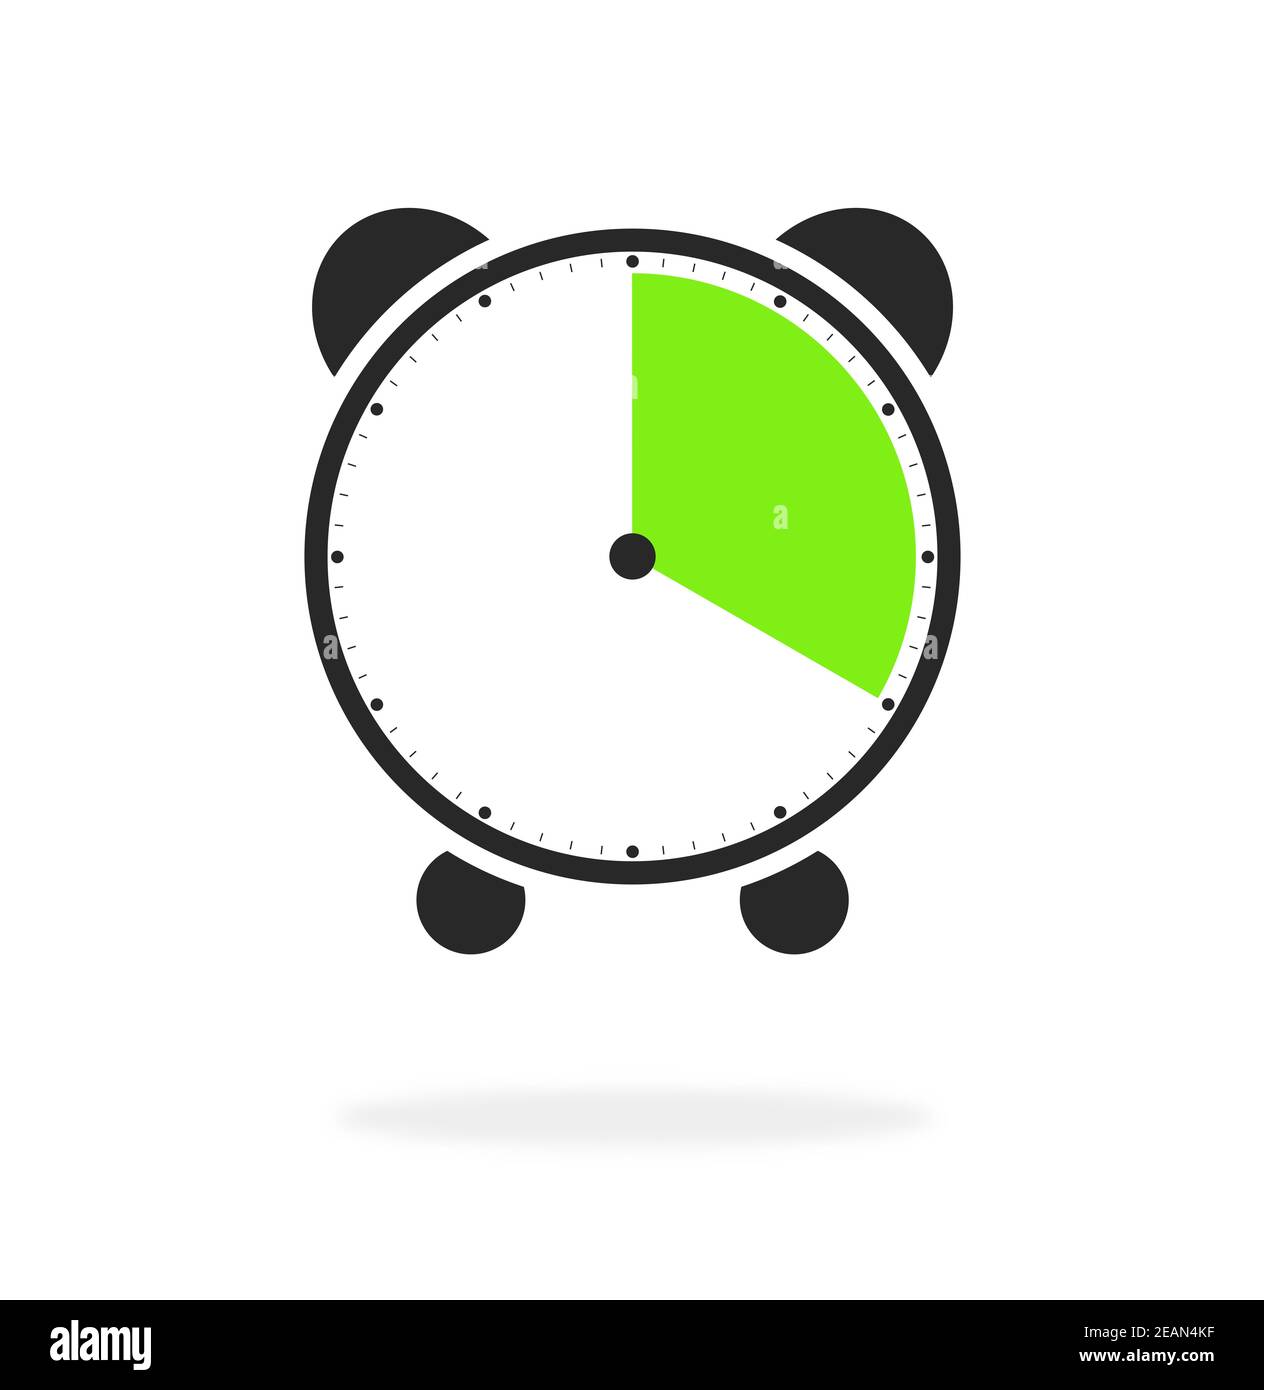 20 segundos, 20 minutos o 4 horas: Icono de reloj despertador verde y negro Foto de stock